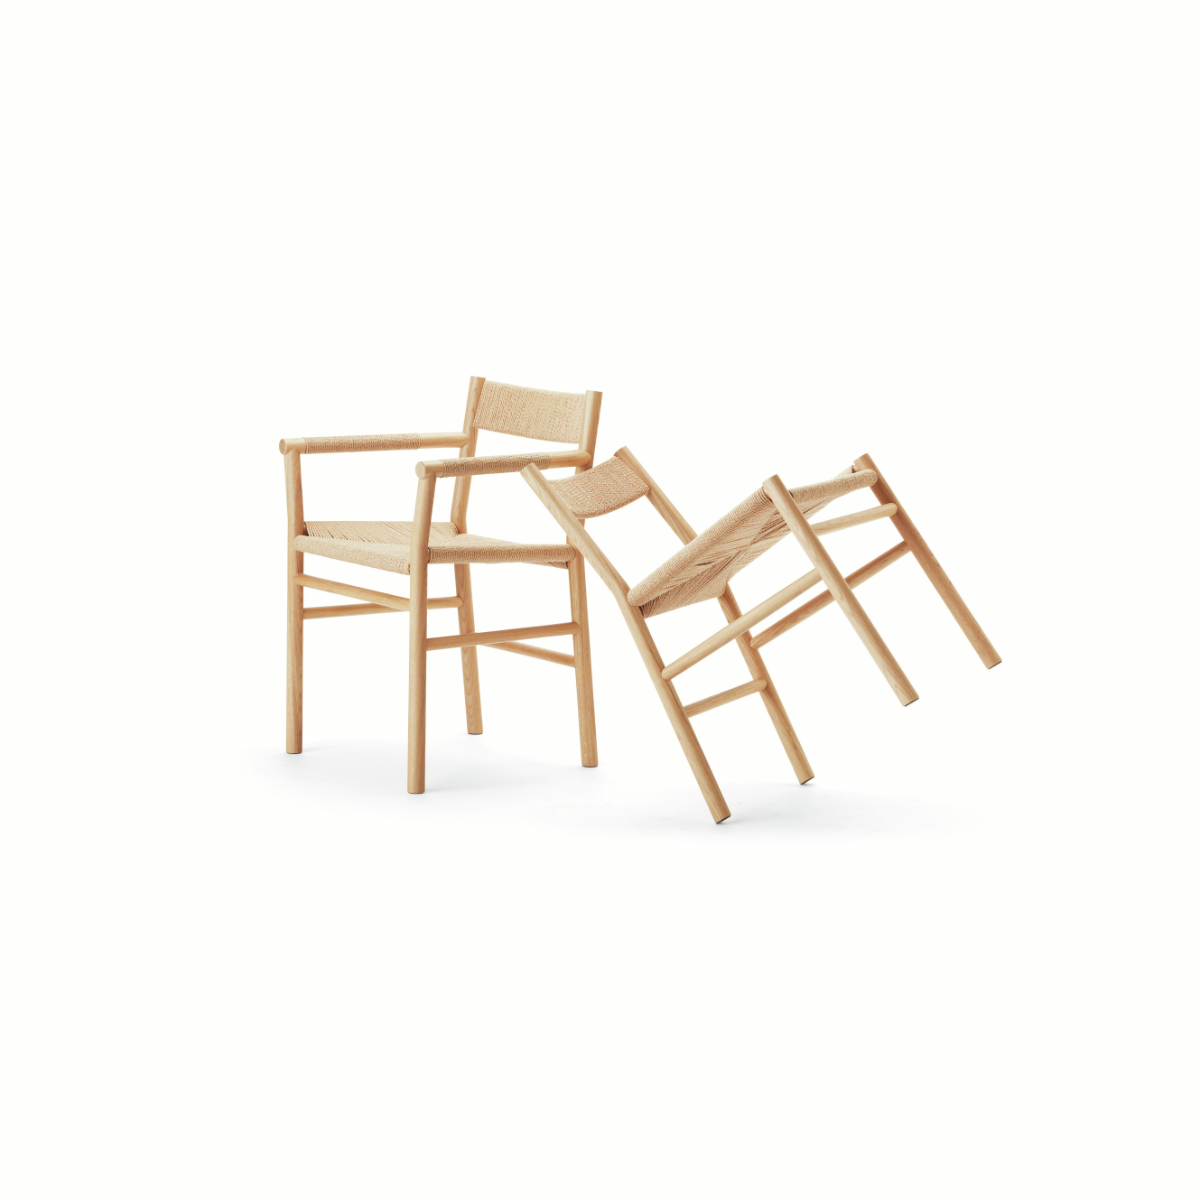 CORD - Oak chair